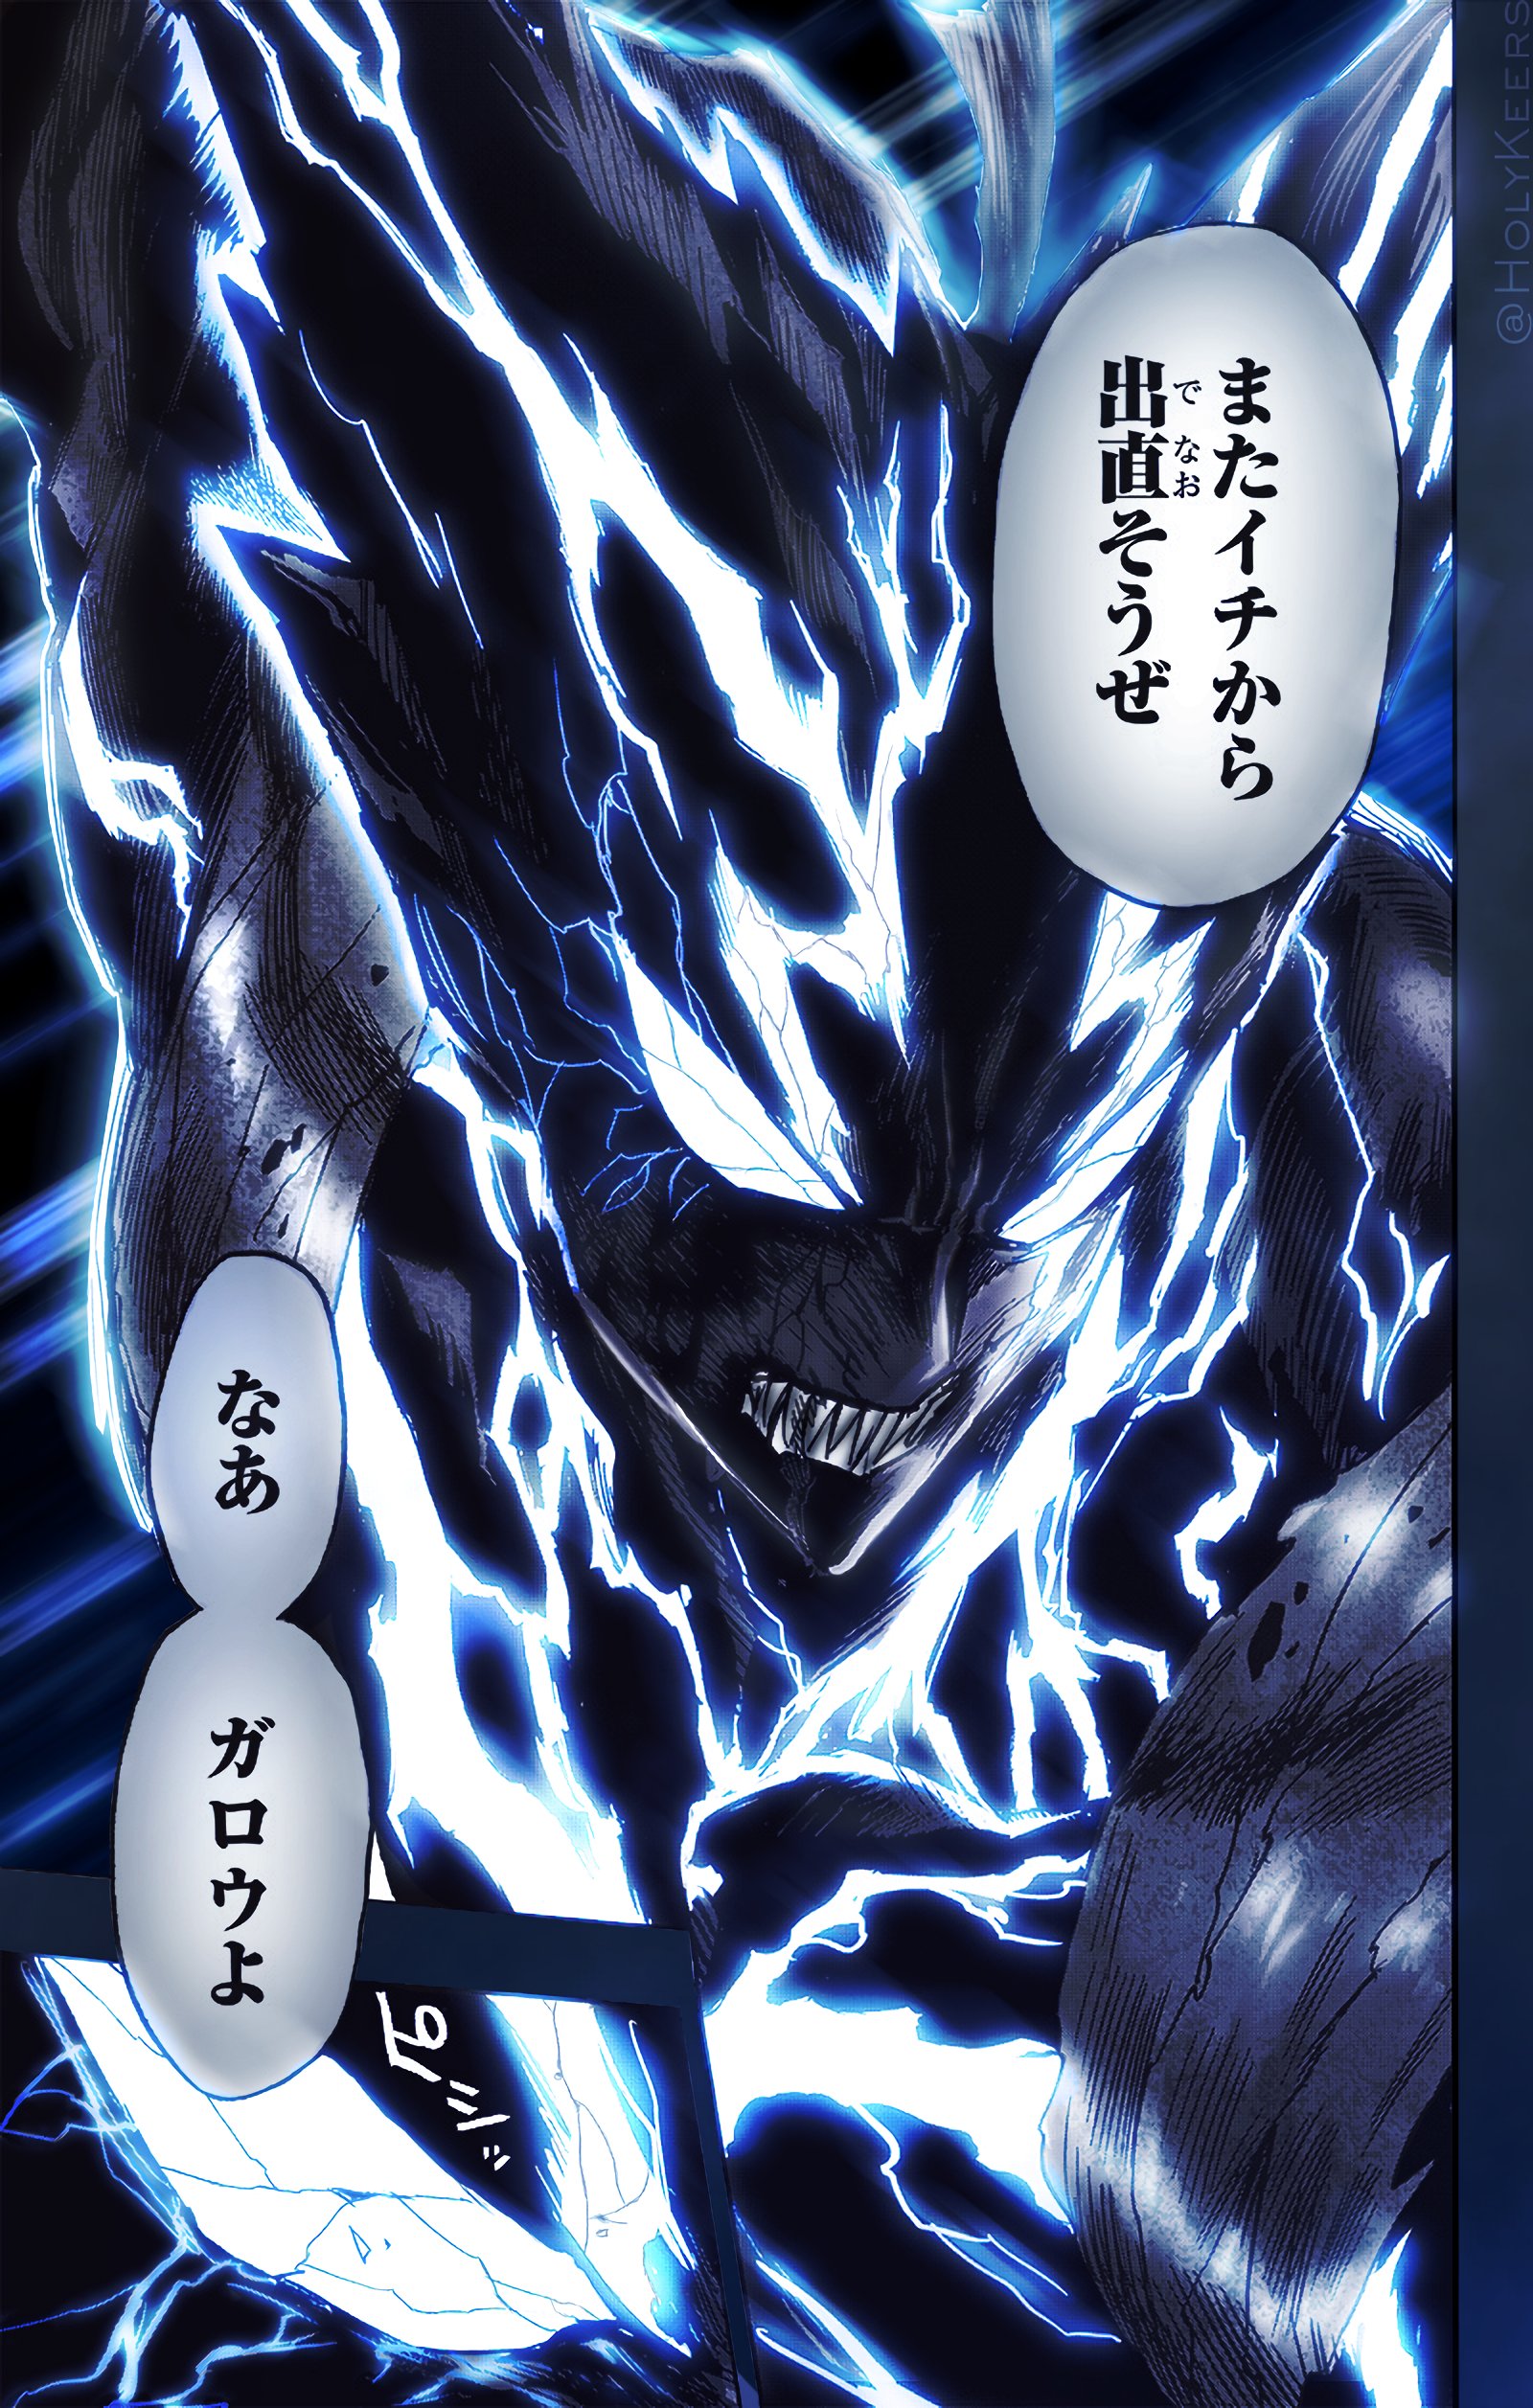 HolyKeers on X: Awakened (Cosmic) Garou One Punch Man - Chapter 164 (209)  Redraw #OnePunchMan #ワンパンマン #OPM #Garou #MangaColoring   / X